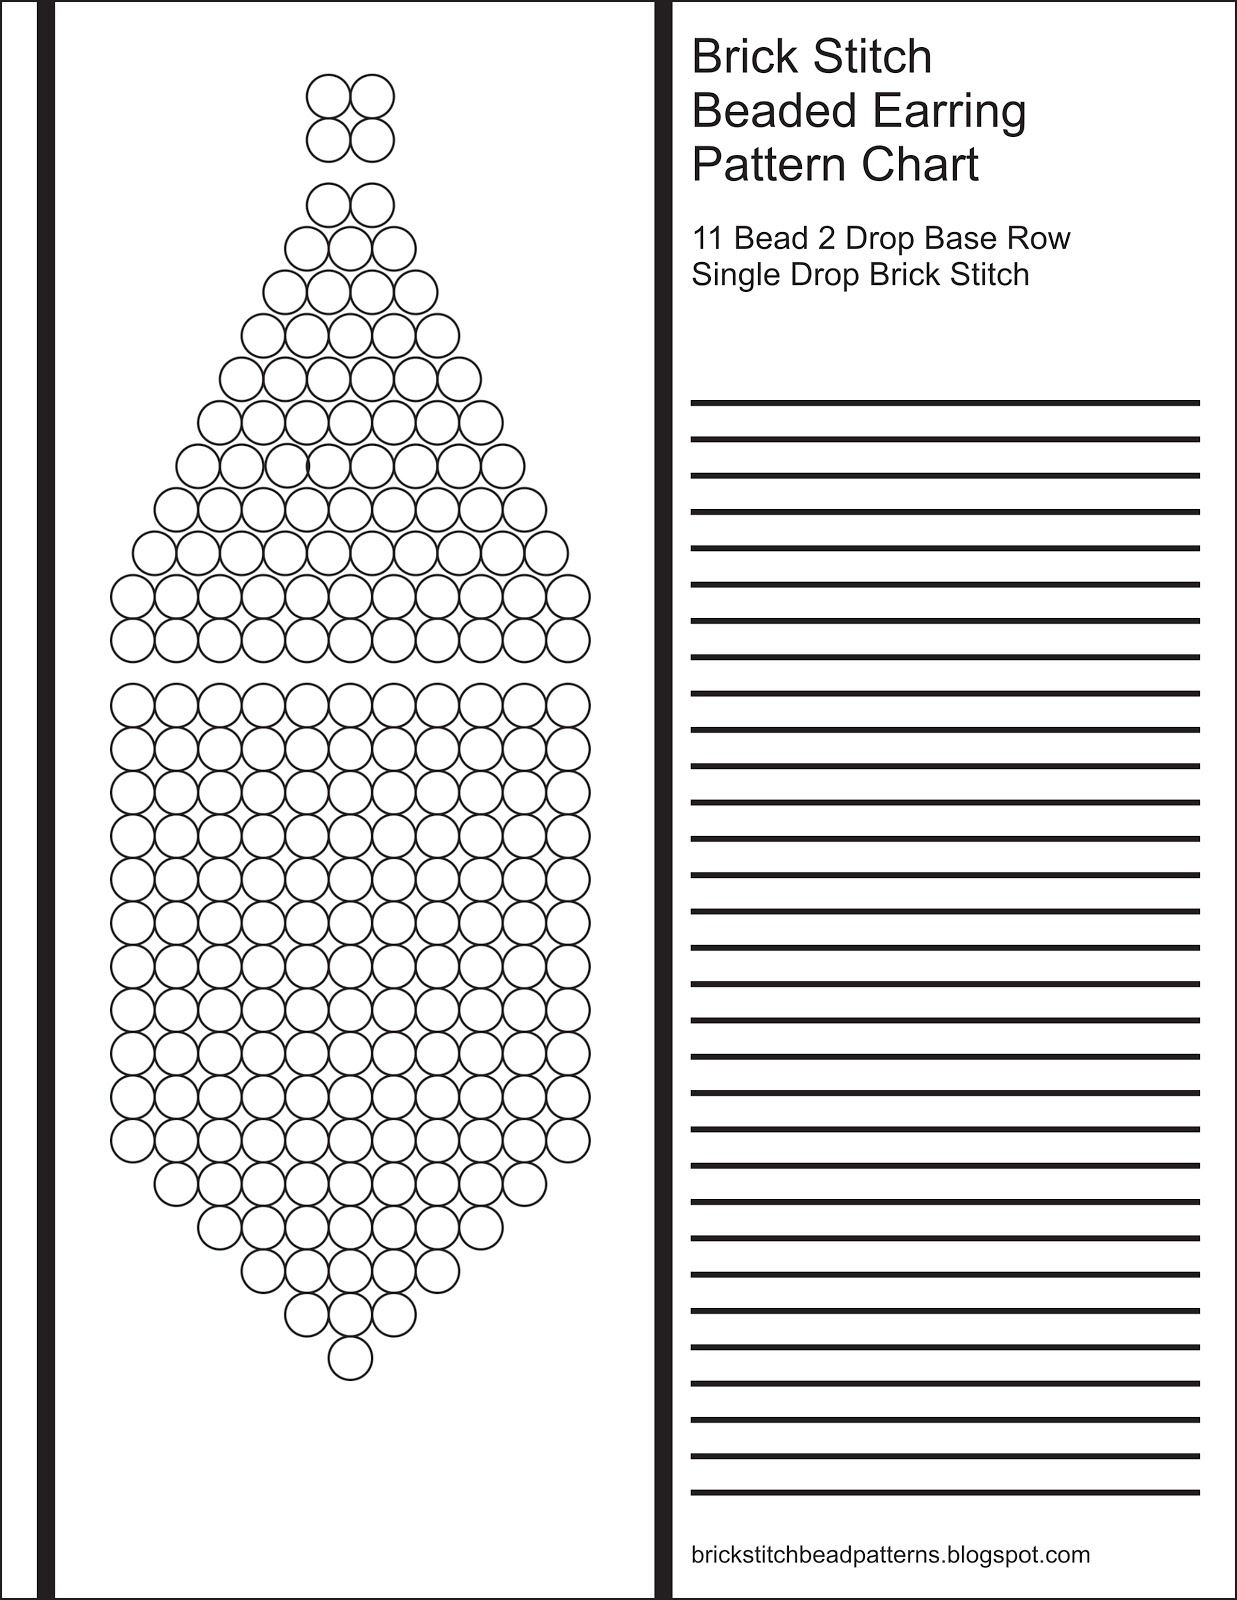 brick-stitch-bead-patterns-journal-11-bead-2-drop-base-row-blank